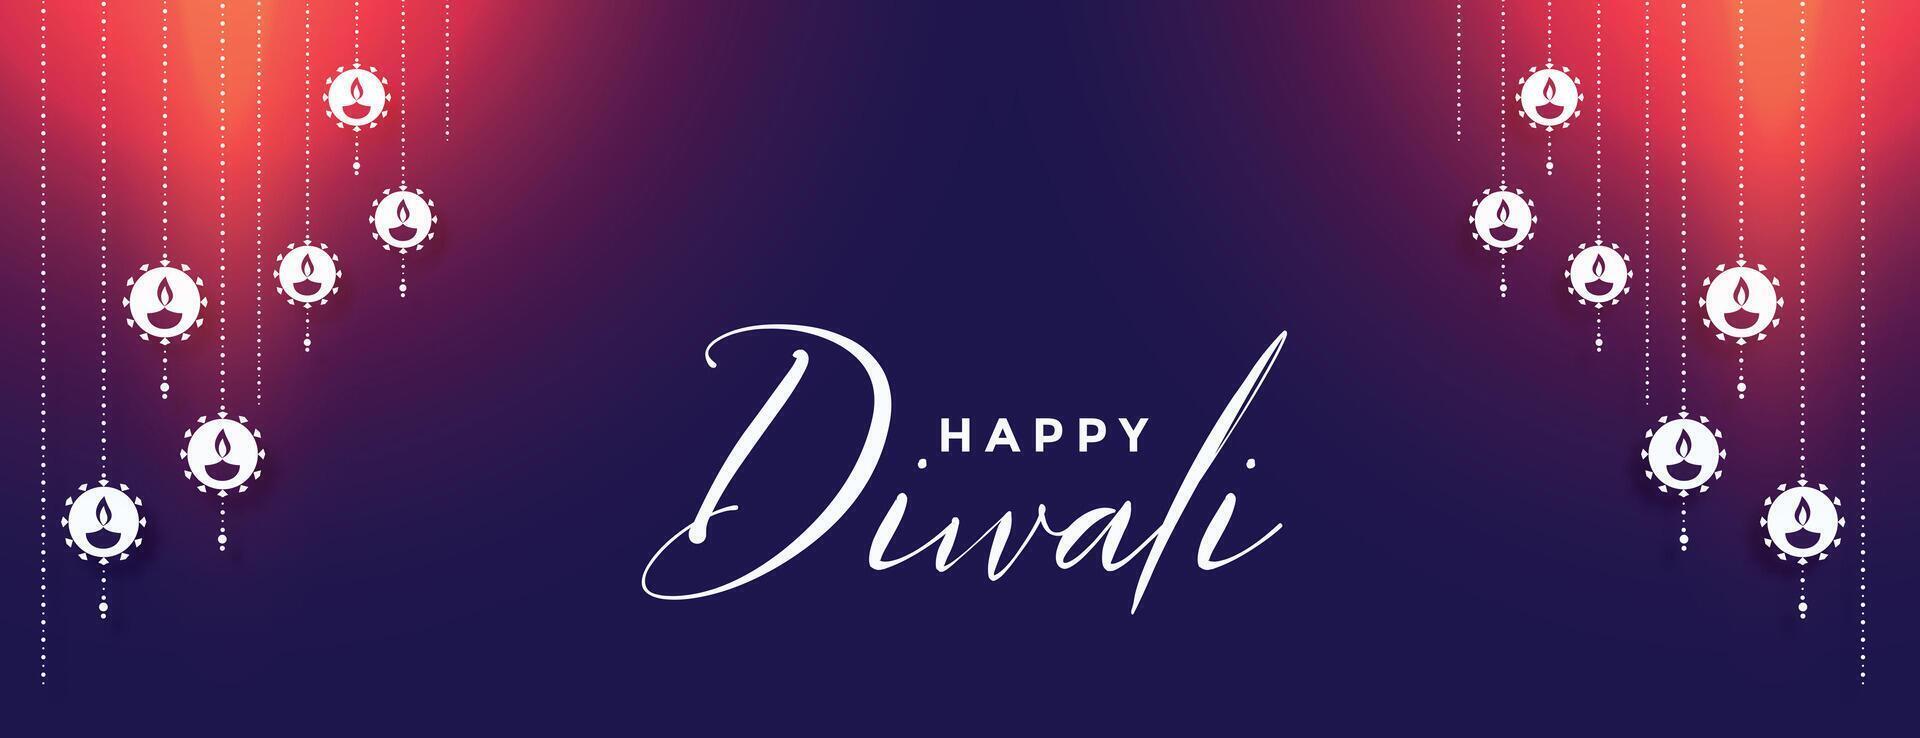 happy diwali glowing festival banner design vector